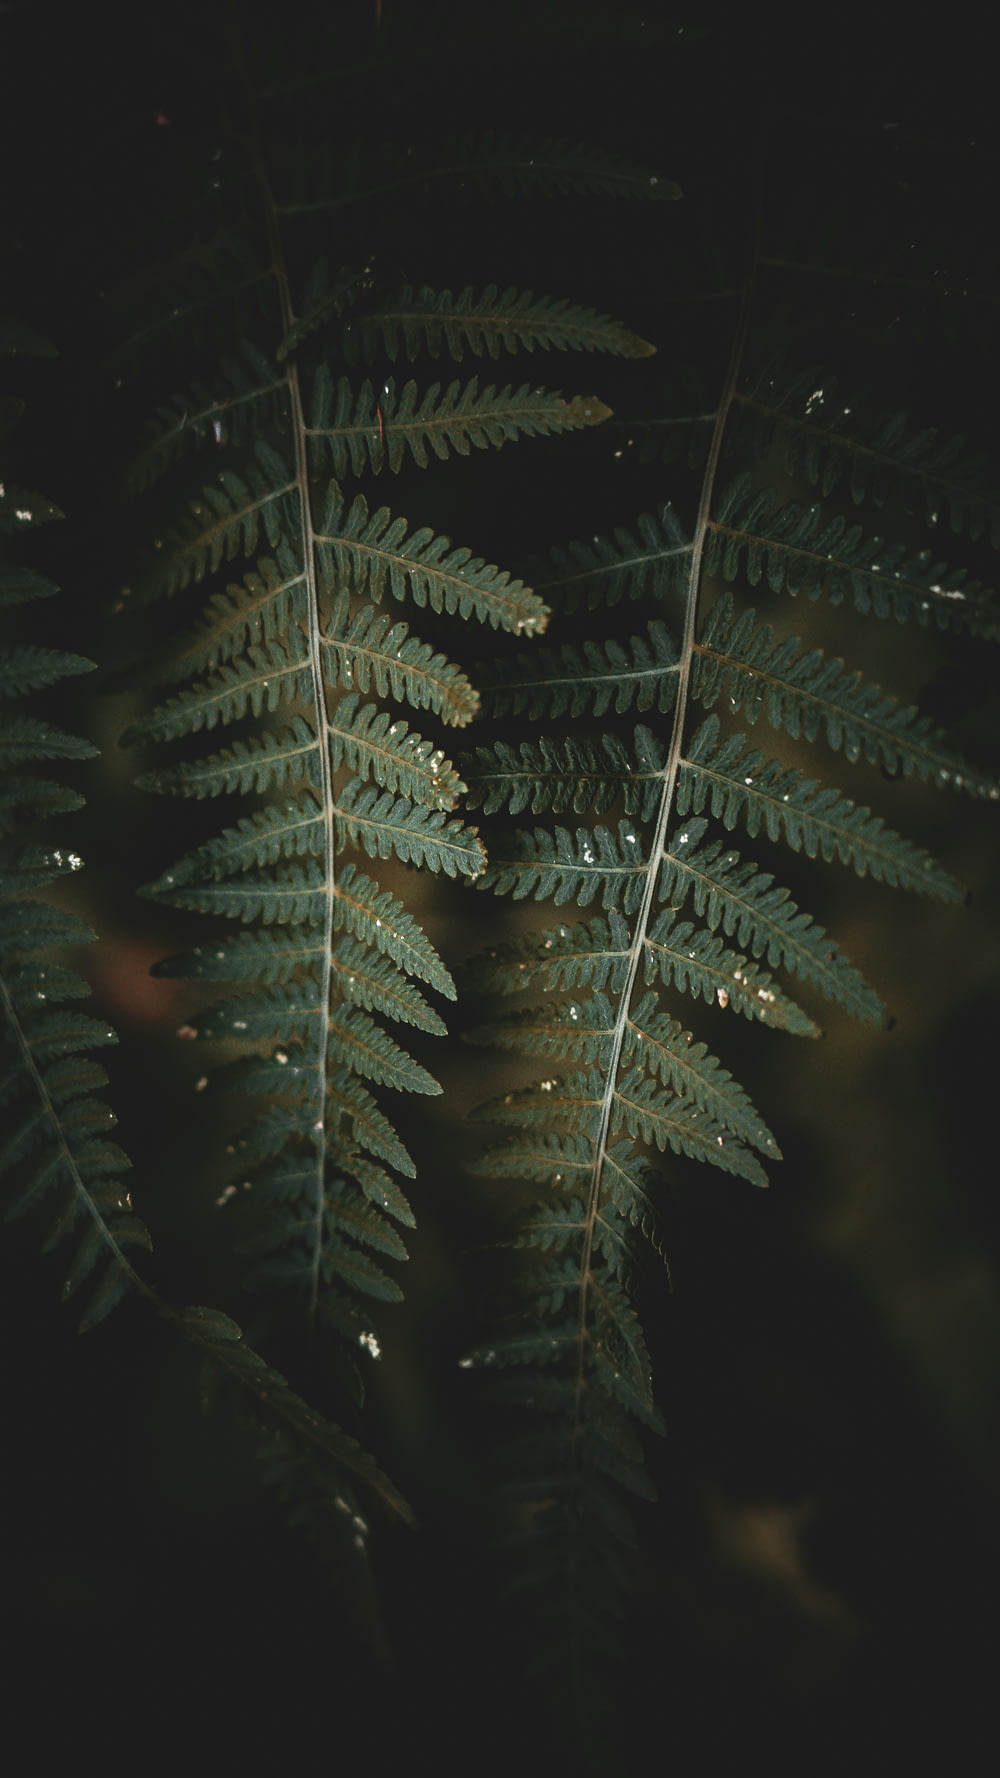 a close up of a fern leaf at night